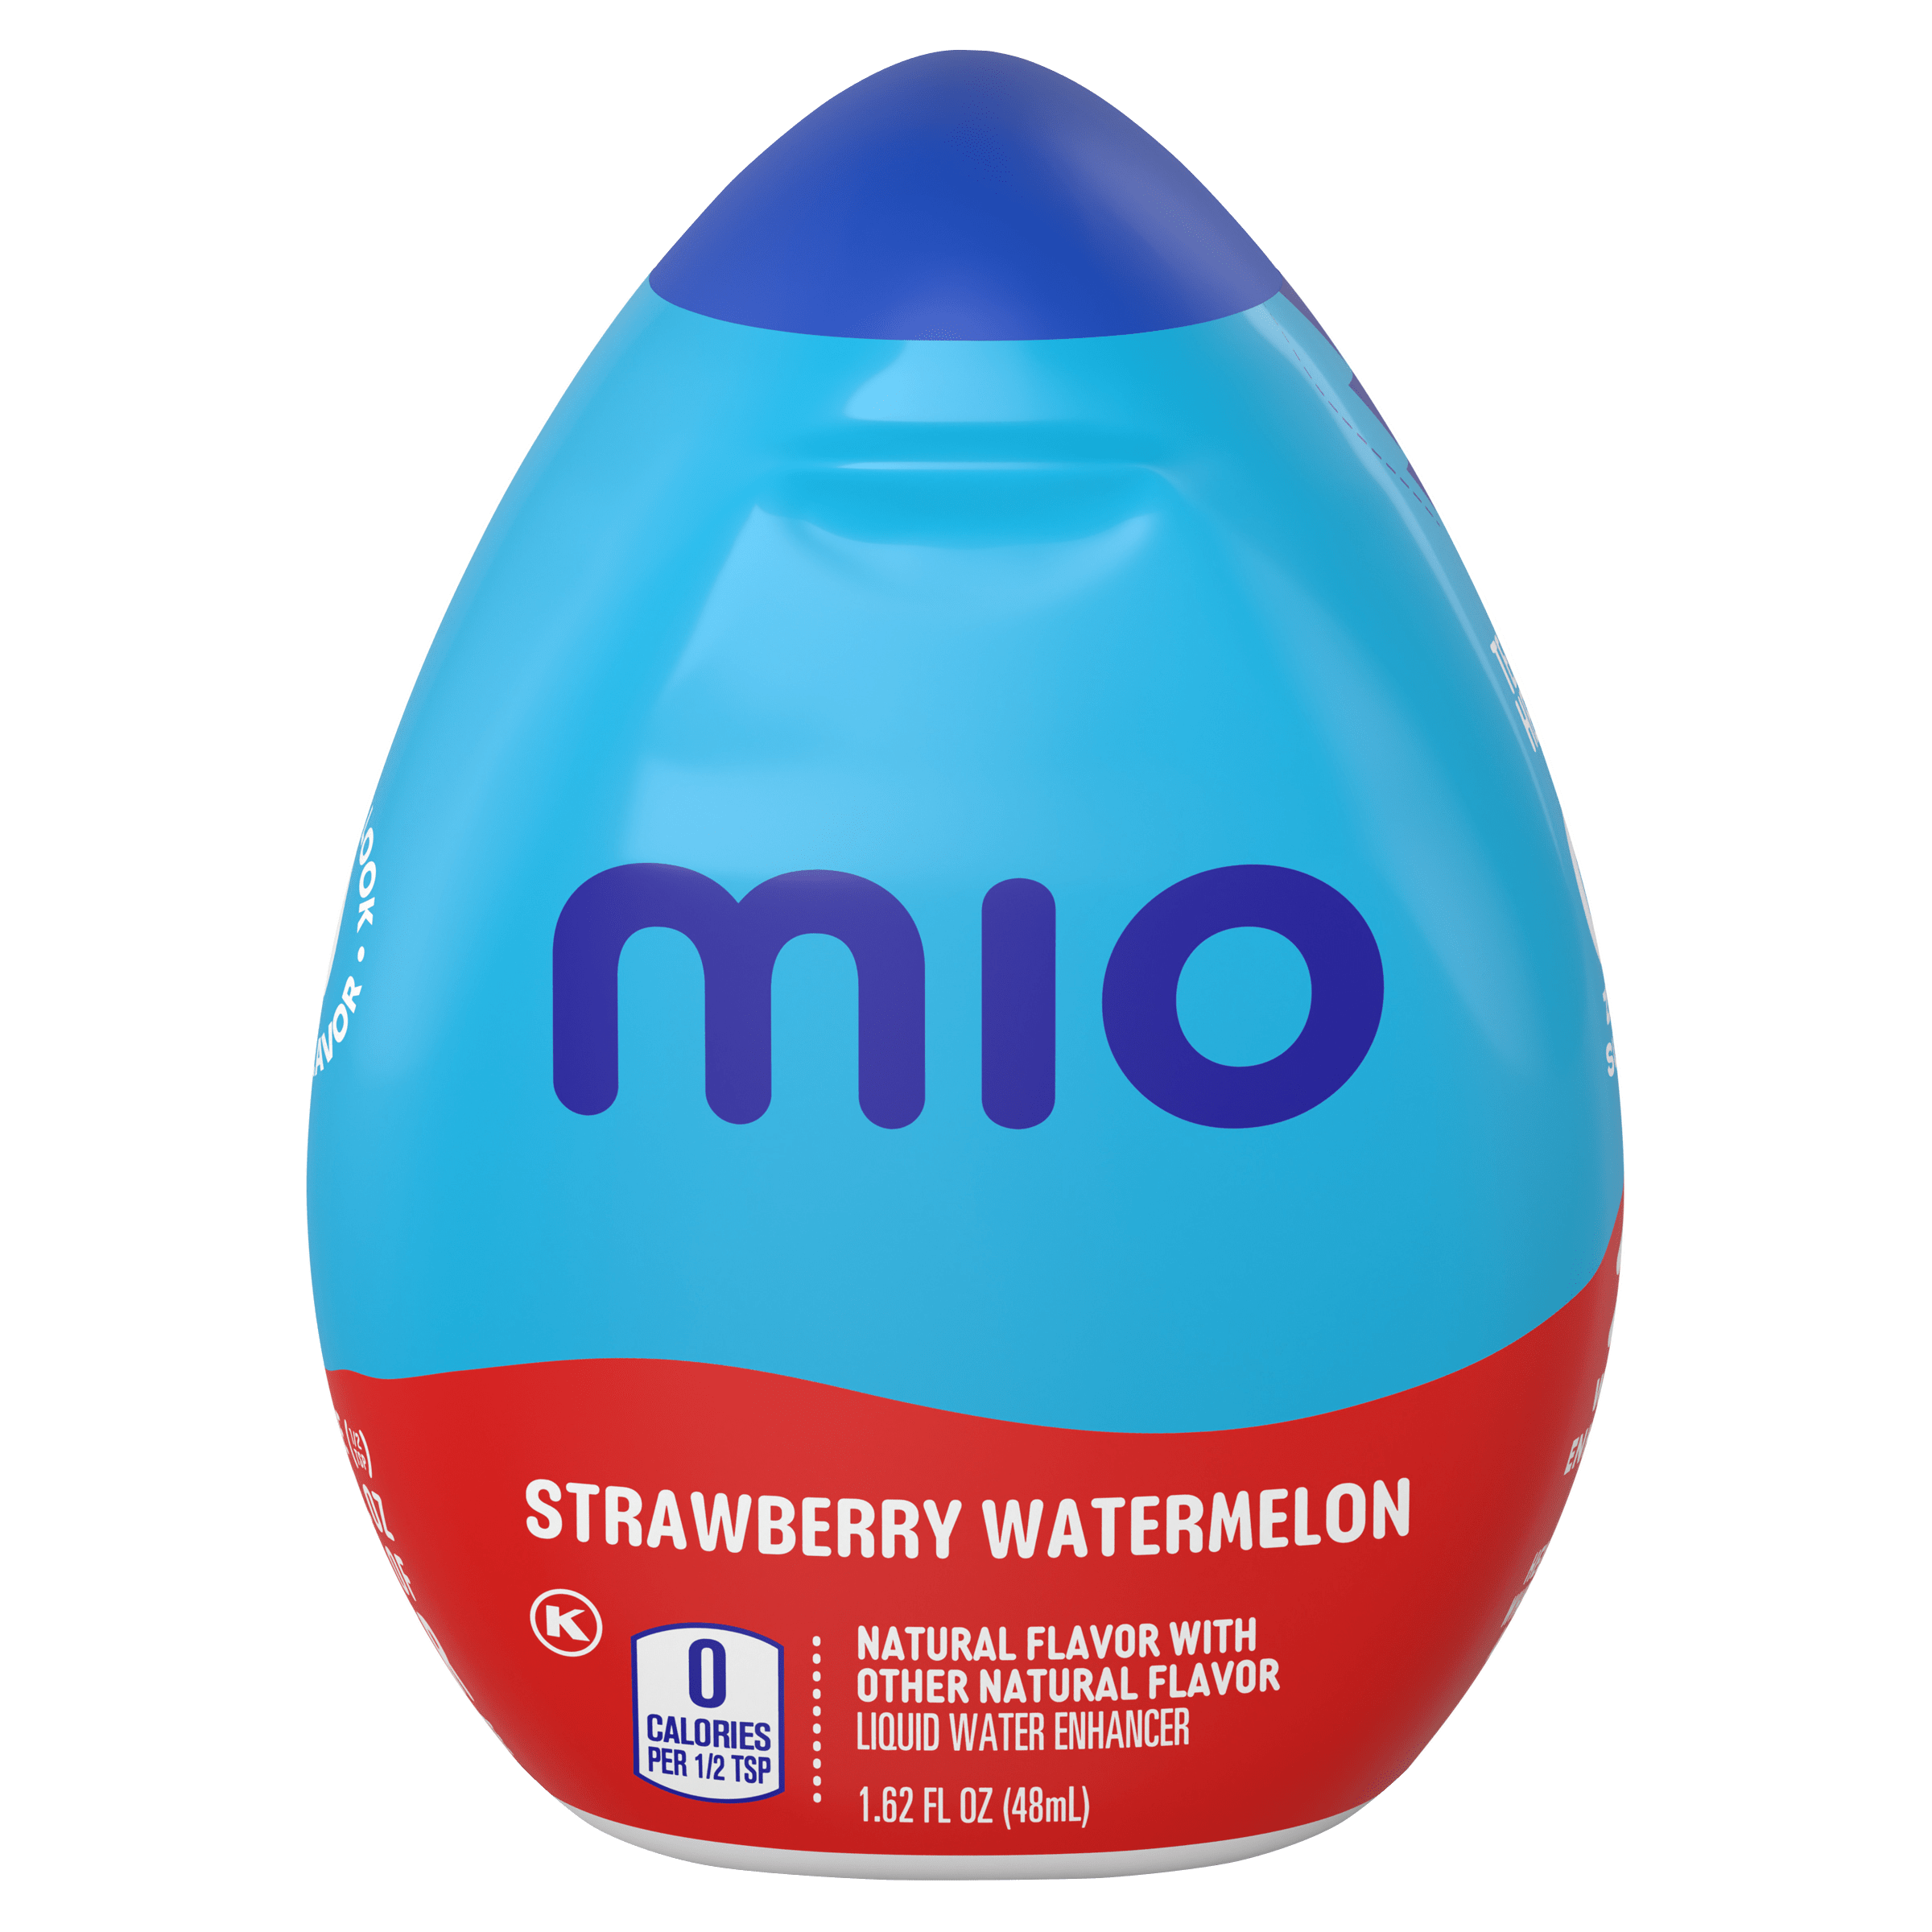 Strawberry Watermelon Naturally Flavored Liquid Water Enhancer